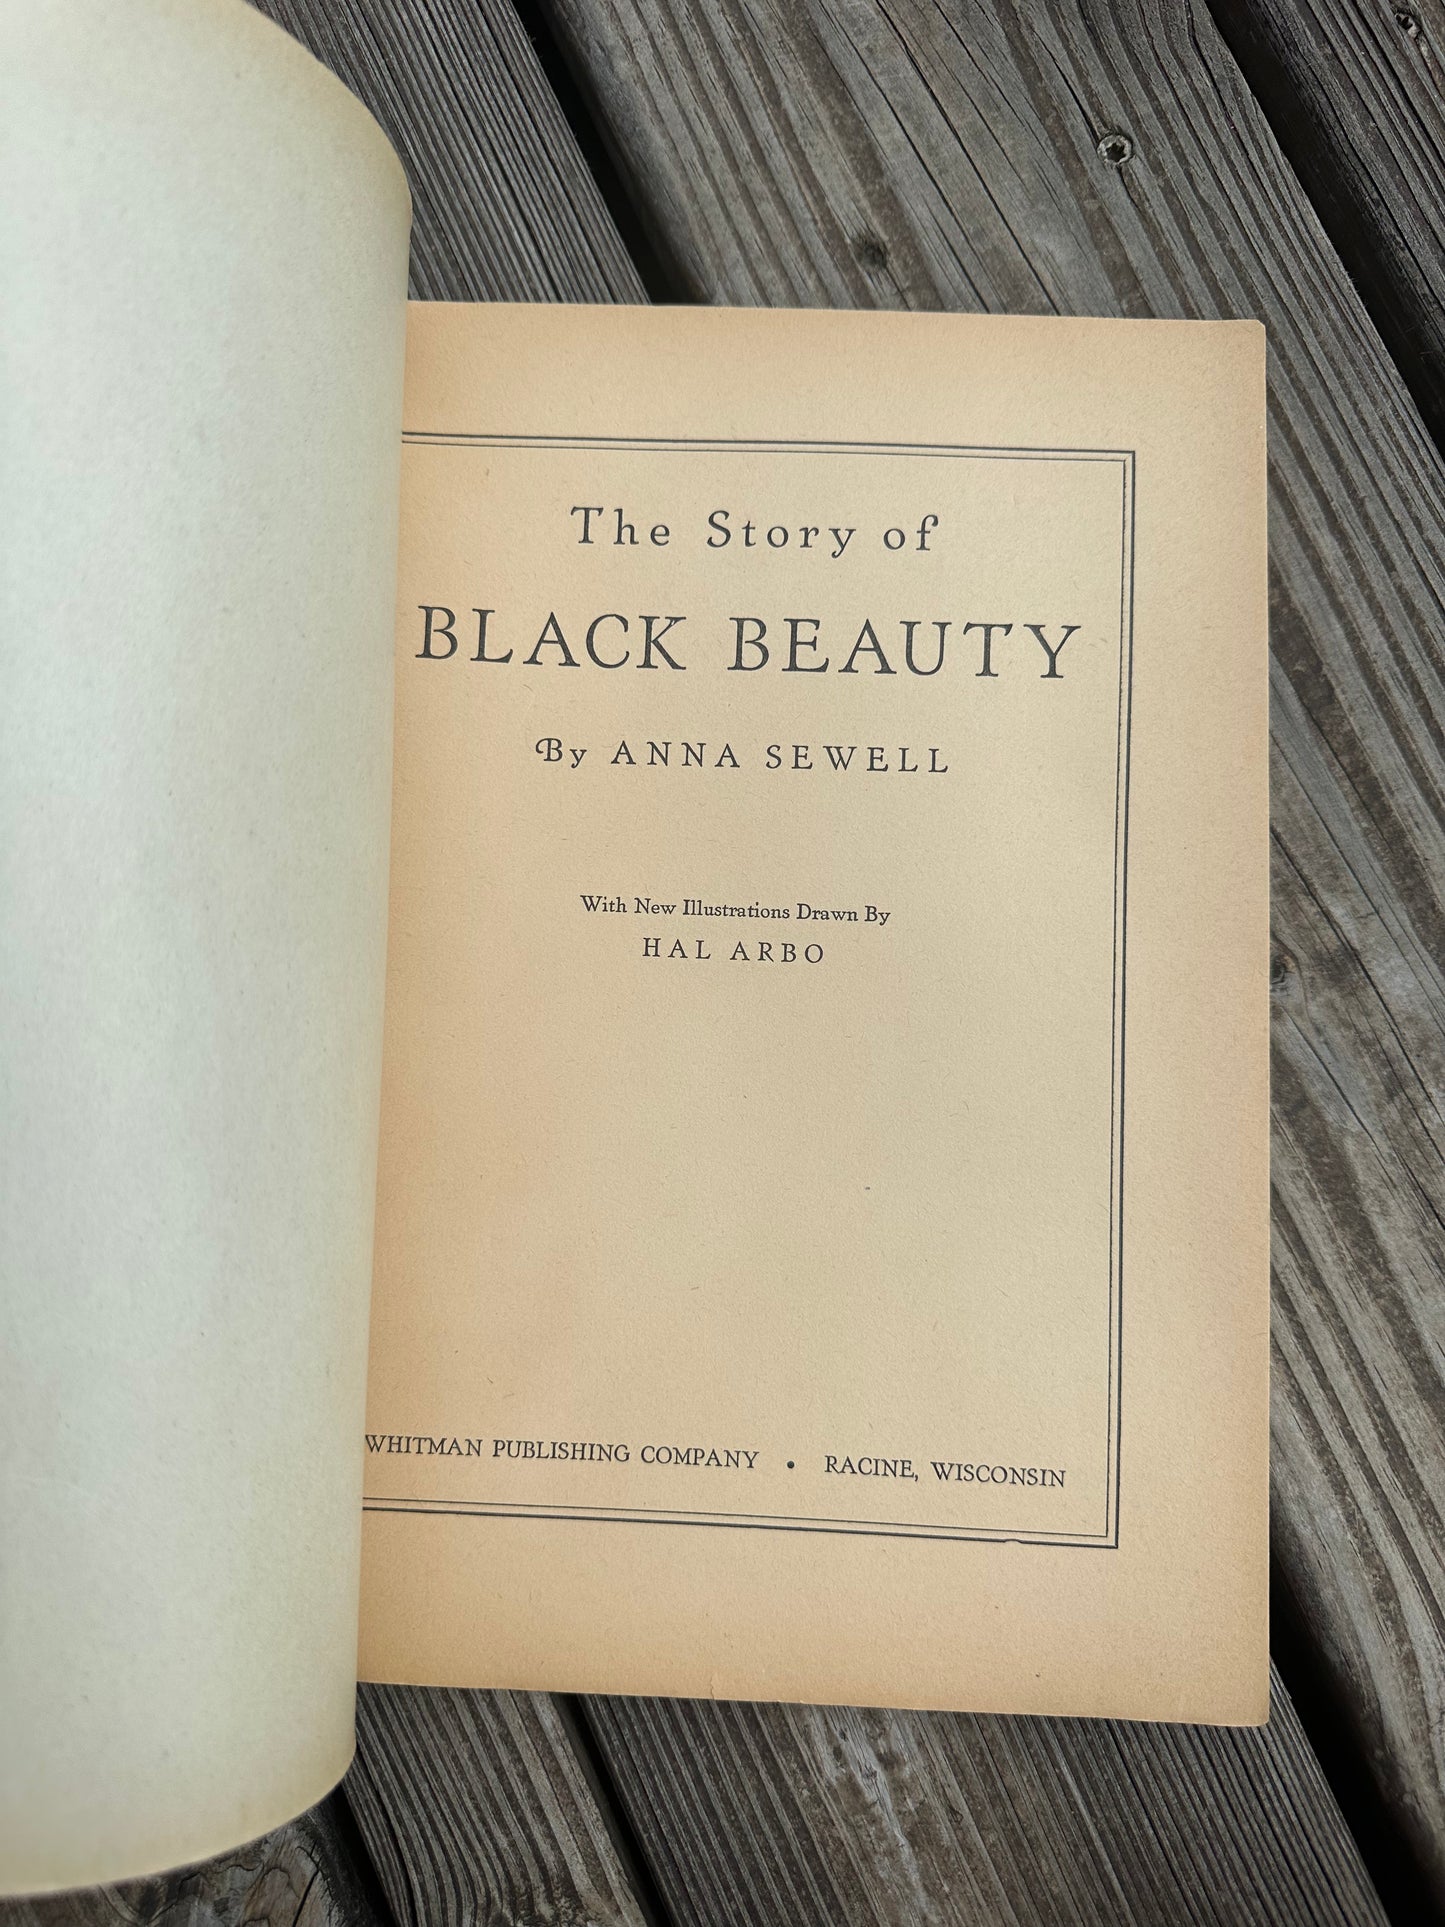 Black Beauty Book